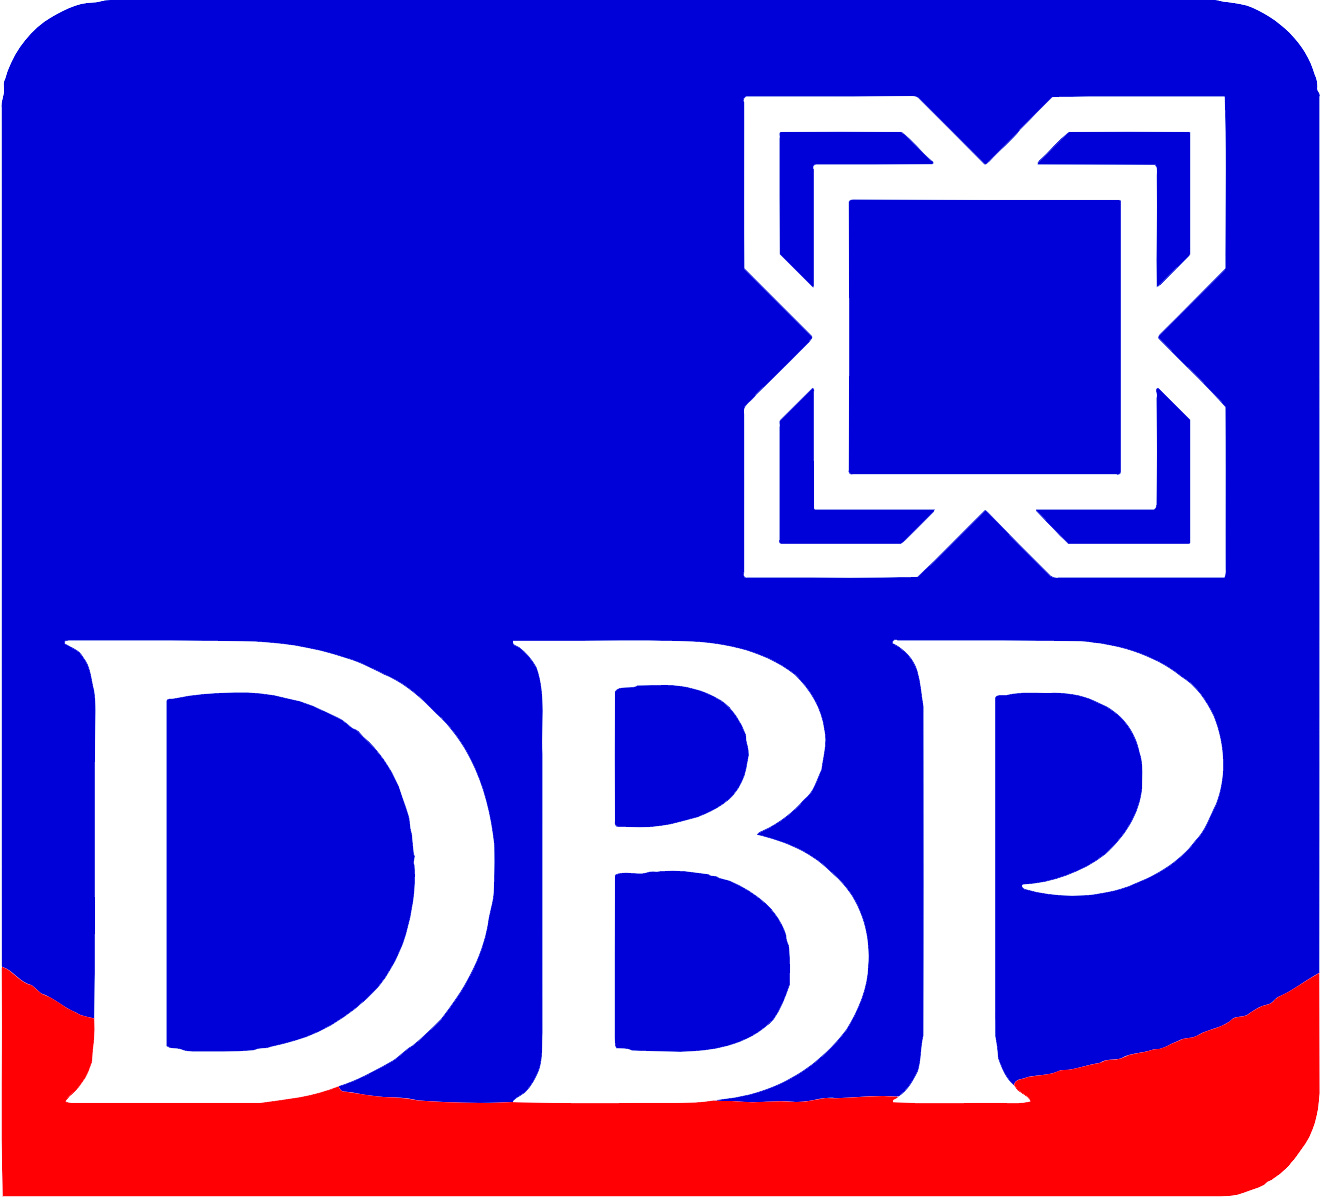 Development Bank of the Philippines (DBP) exchange rate | Maanimo.ph